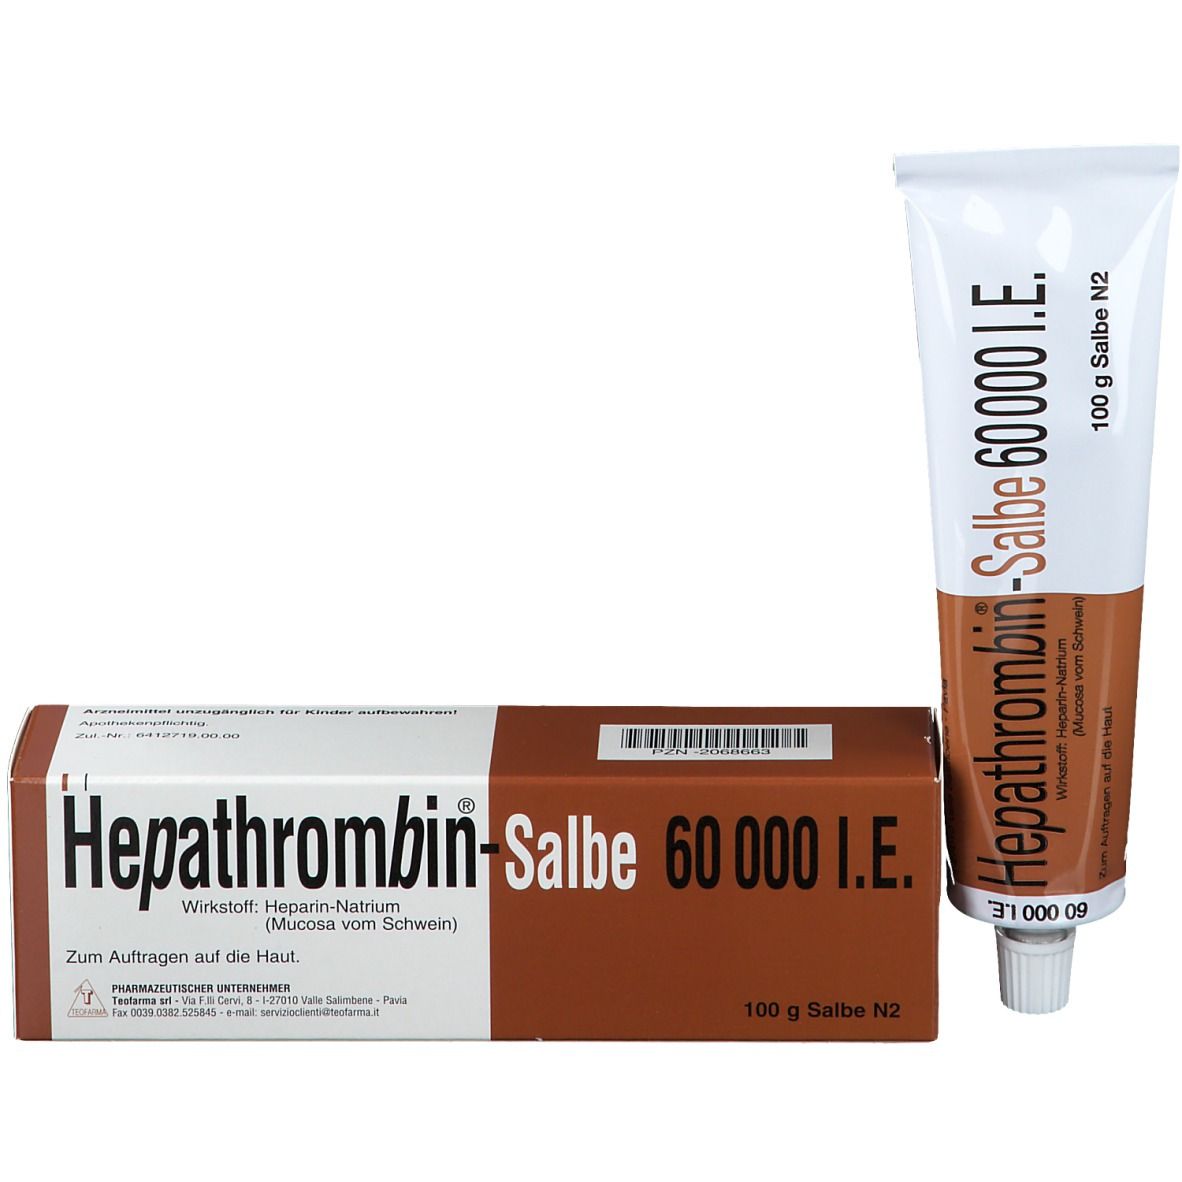 Hepathrombin®-Salbe 60 000 I.E.